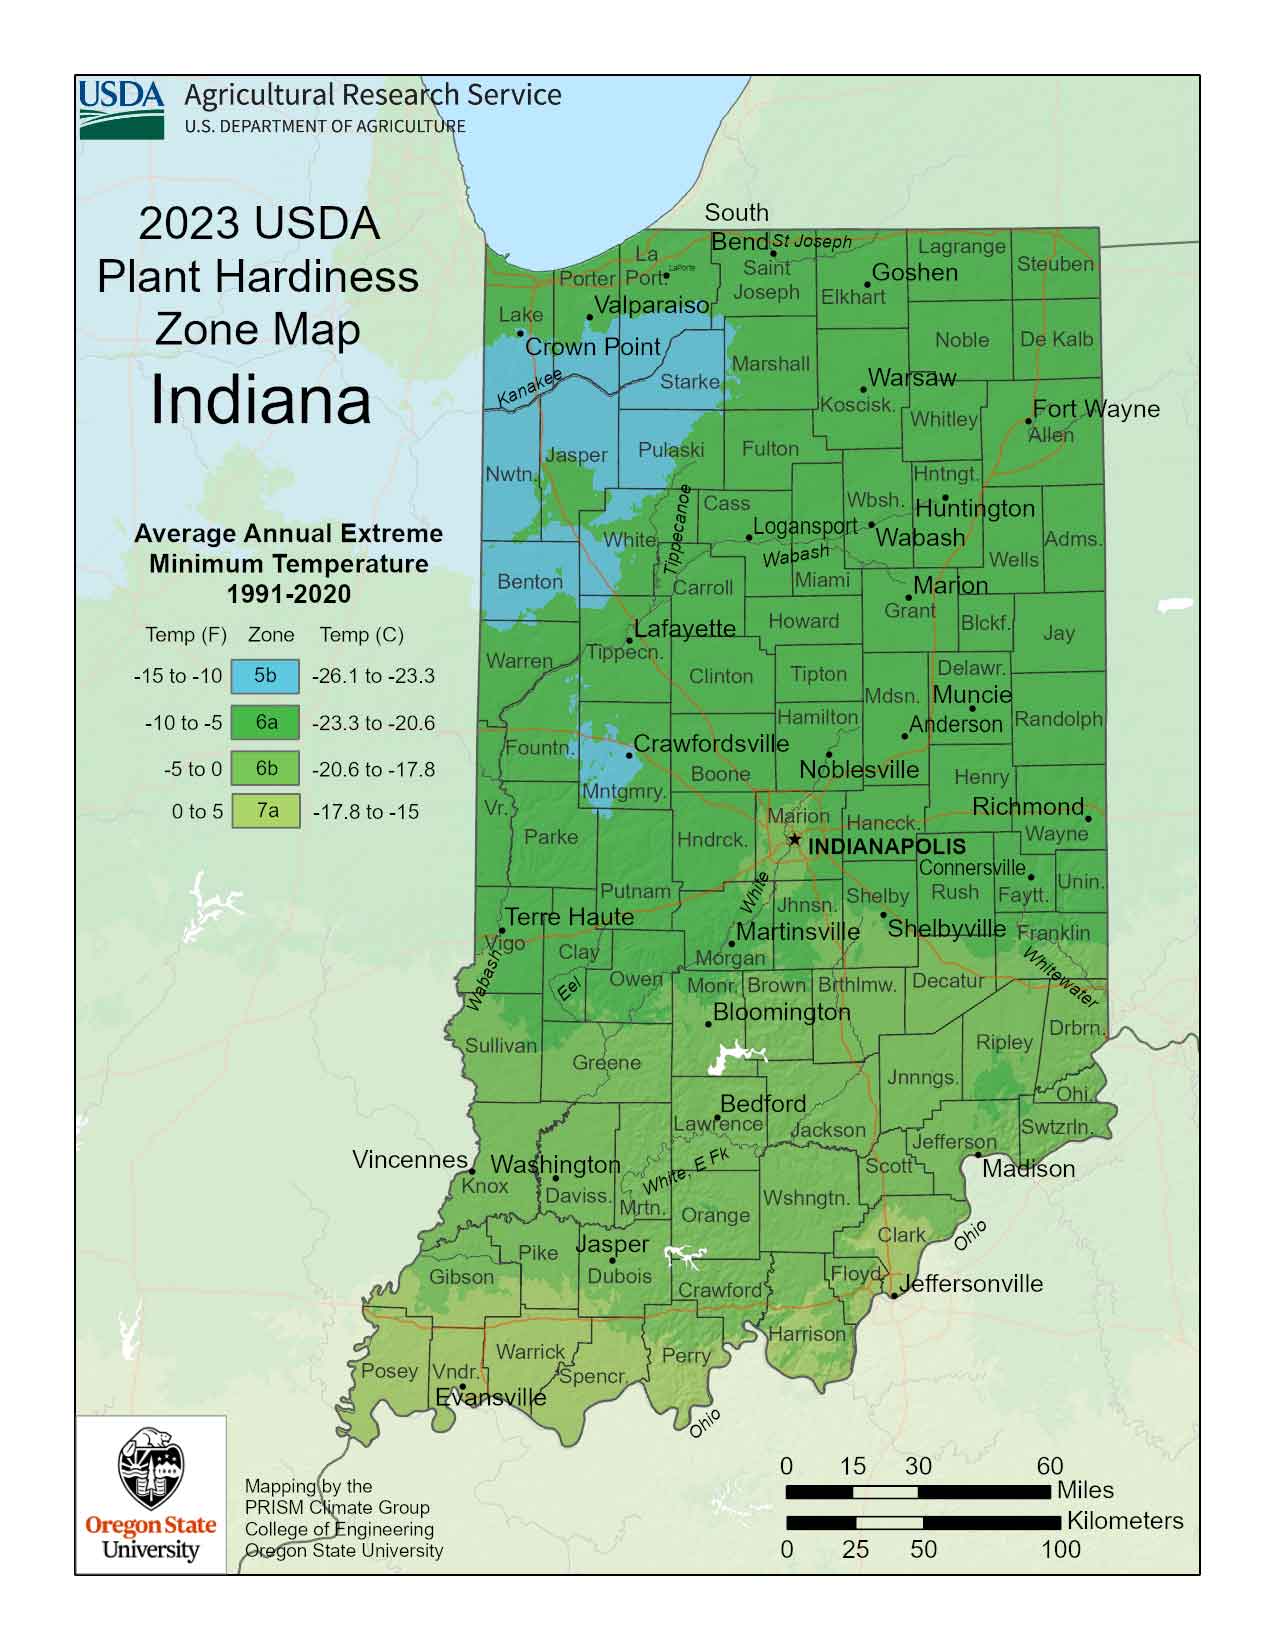 USDA Hardiness Zones in Indiana